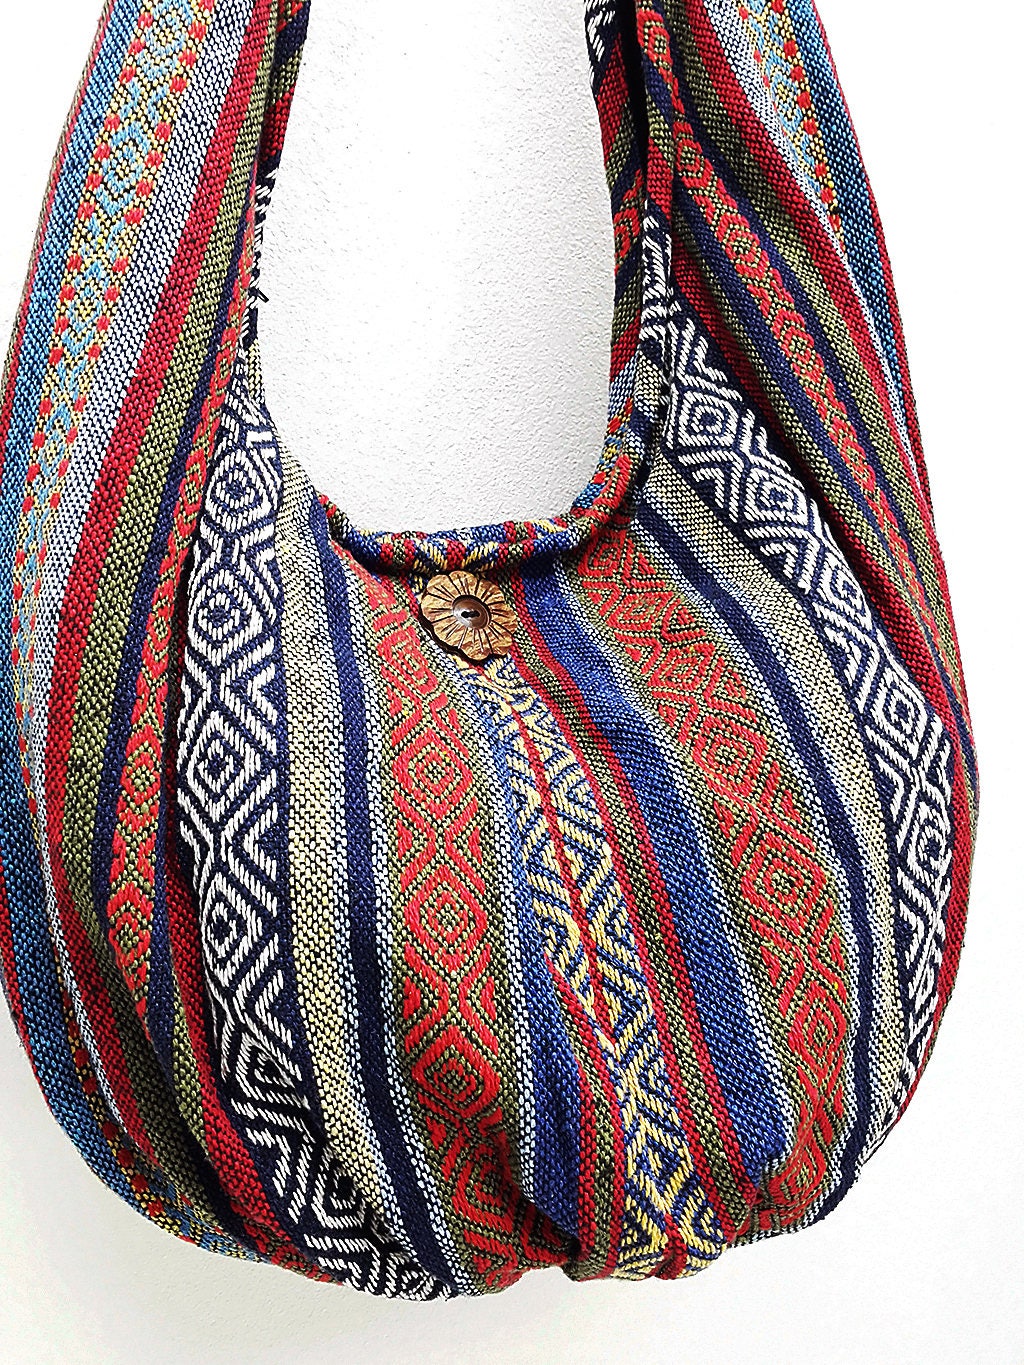 Handmade Woven Bag Handbags Purse Tote Thai Cotton Bag Hippie | Etsy